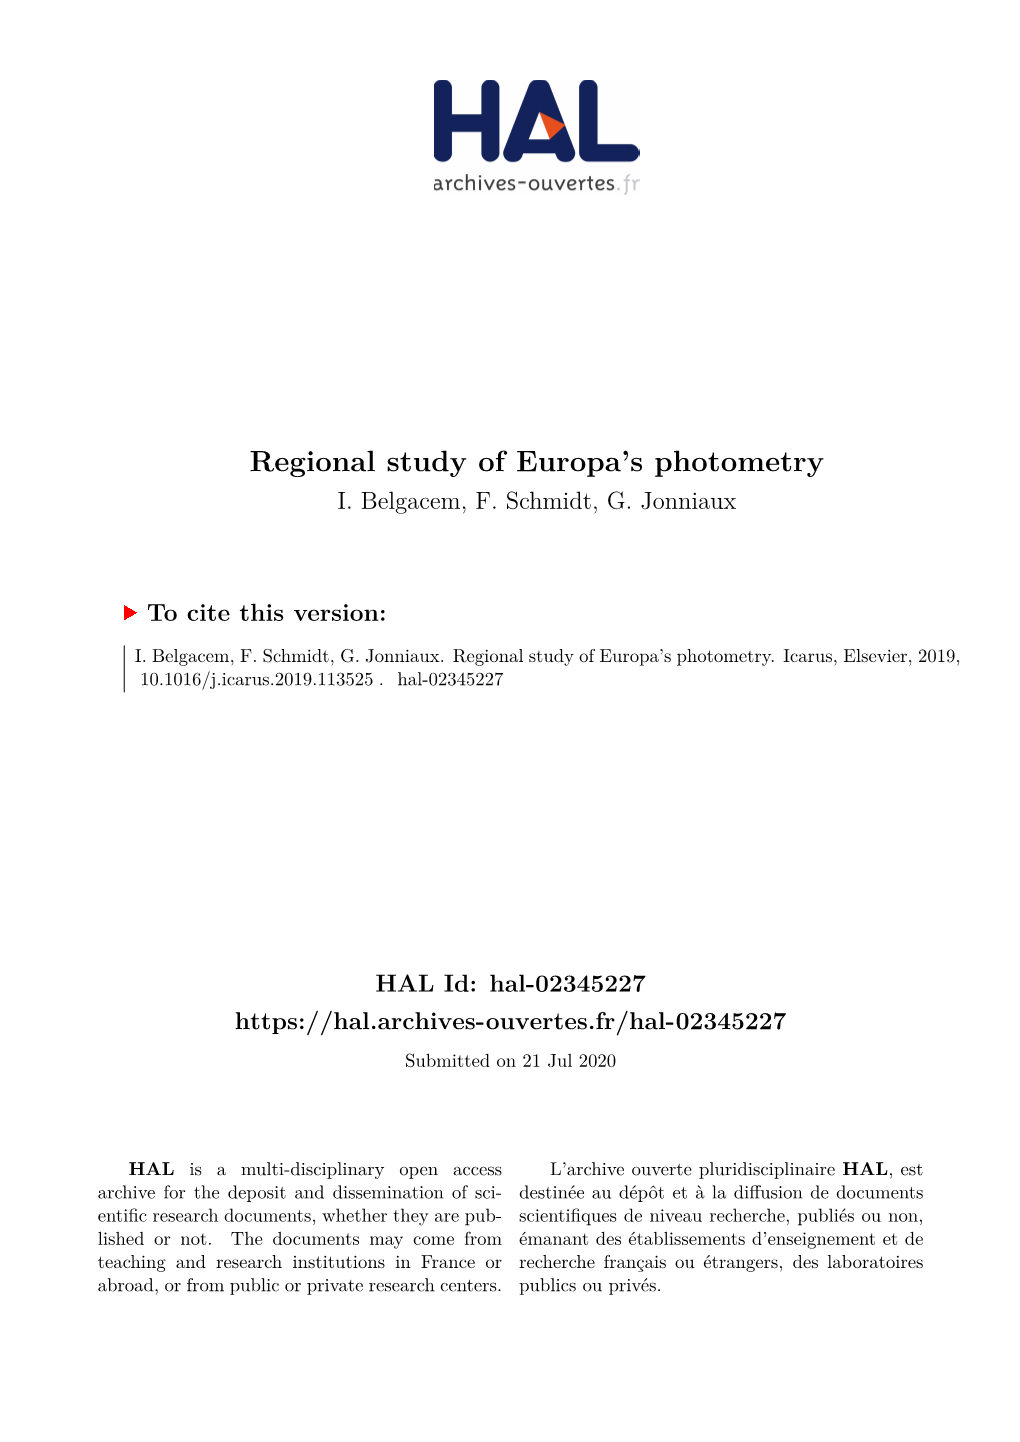 Regional Study of Europa's Photometry